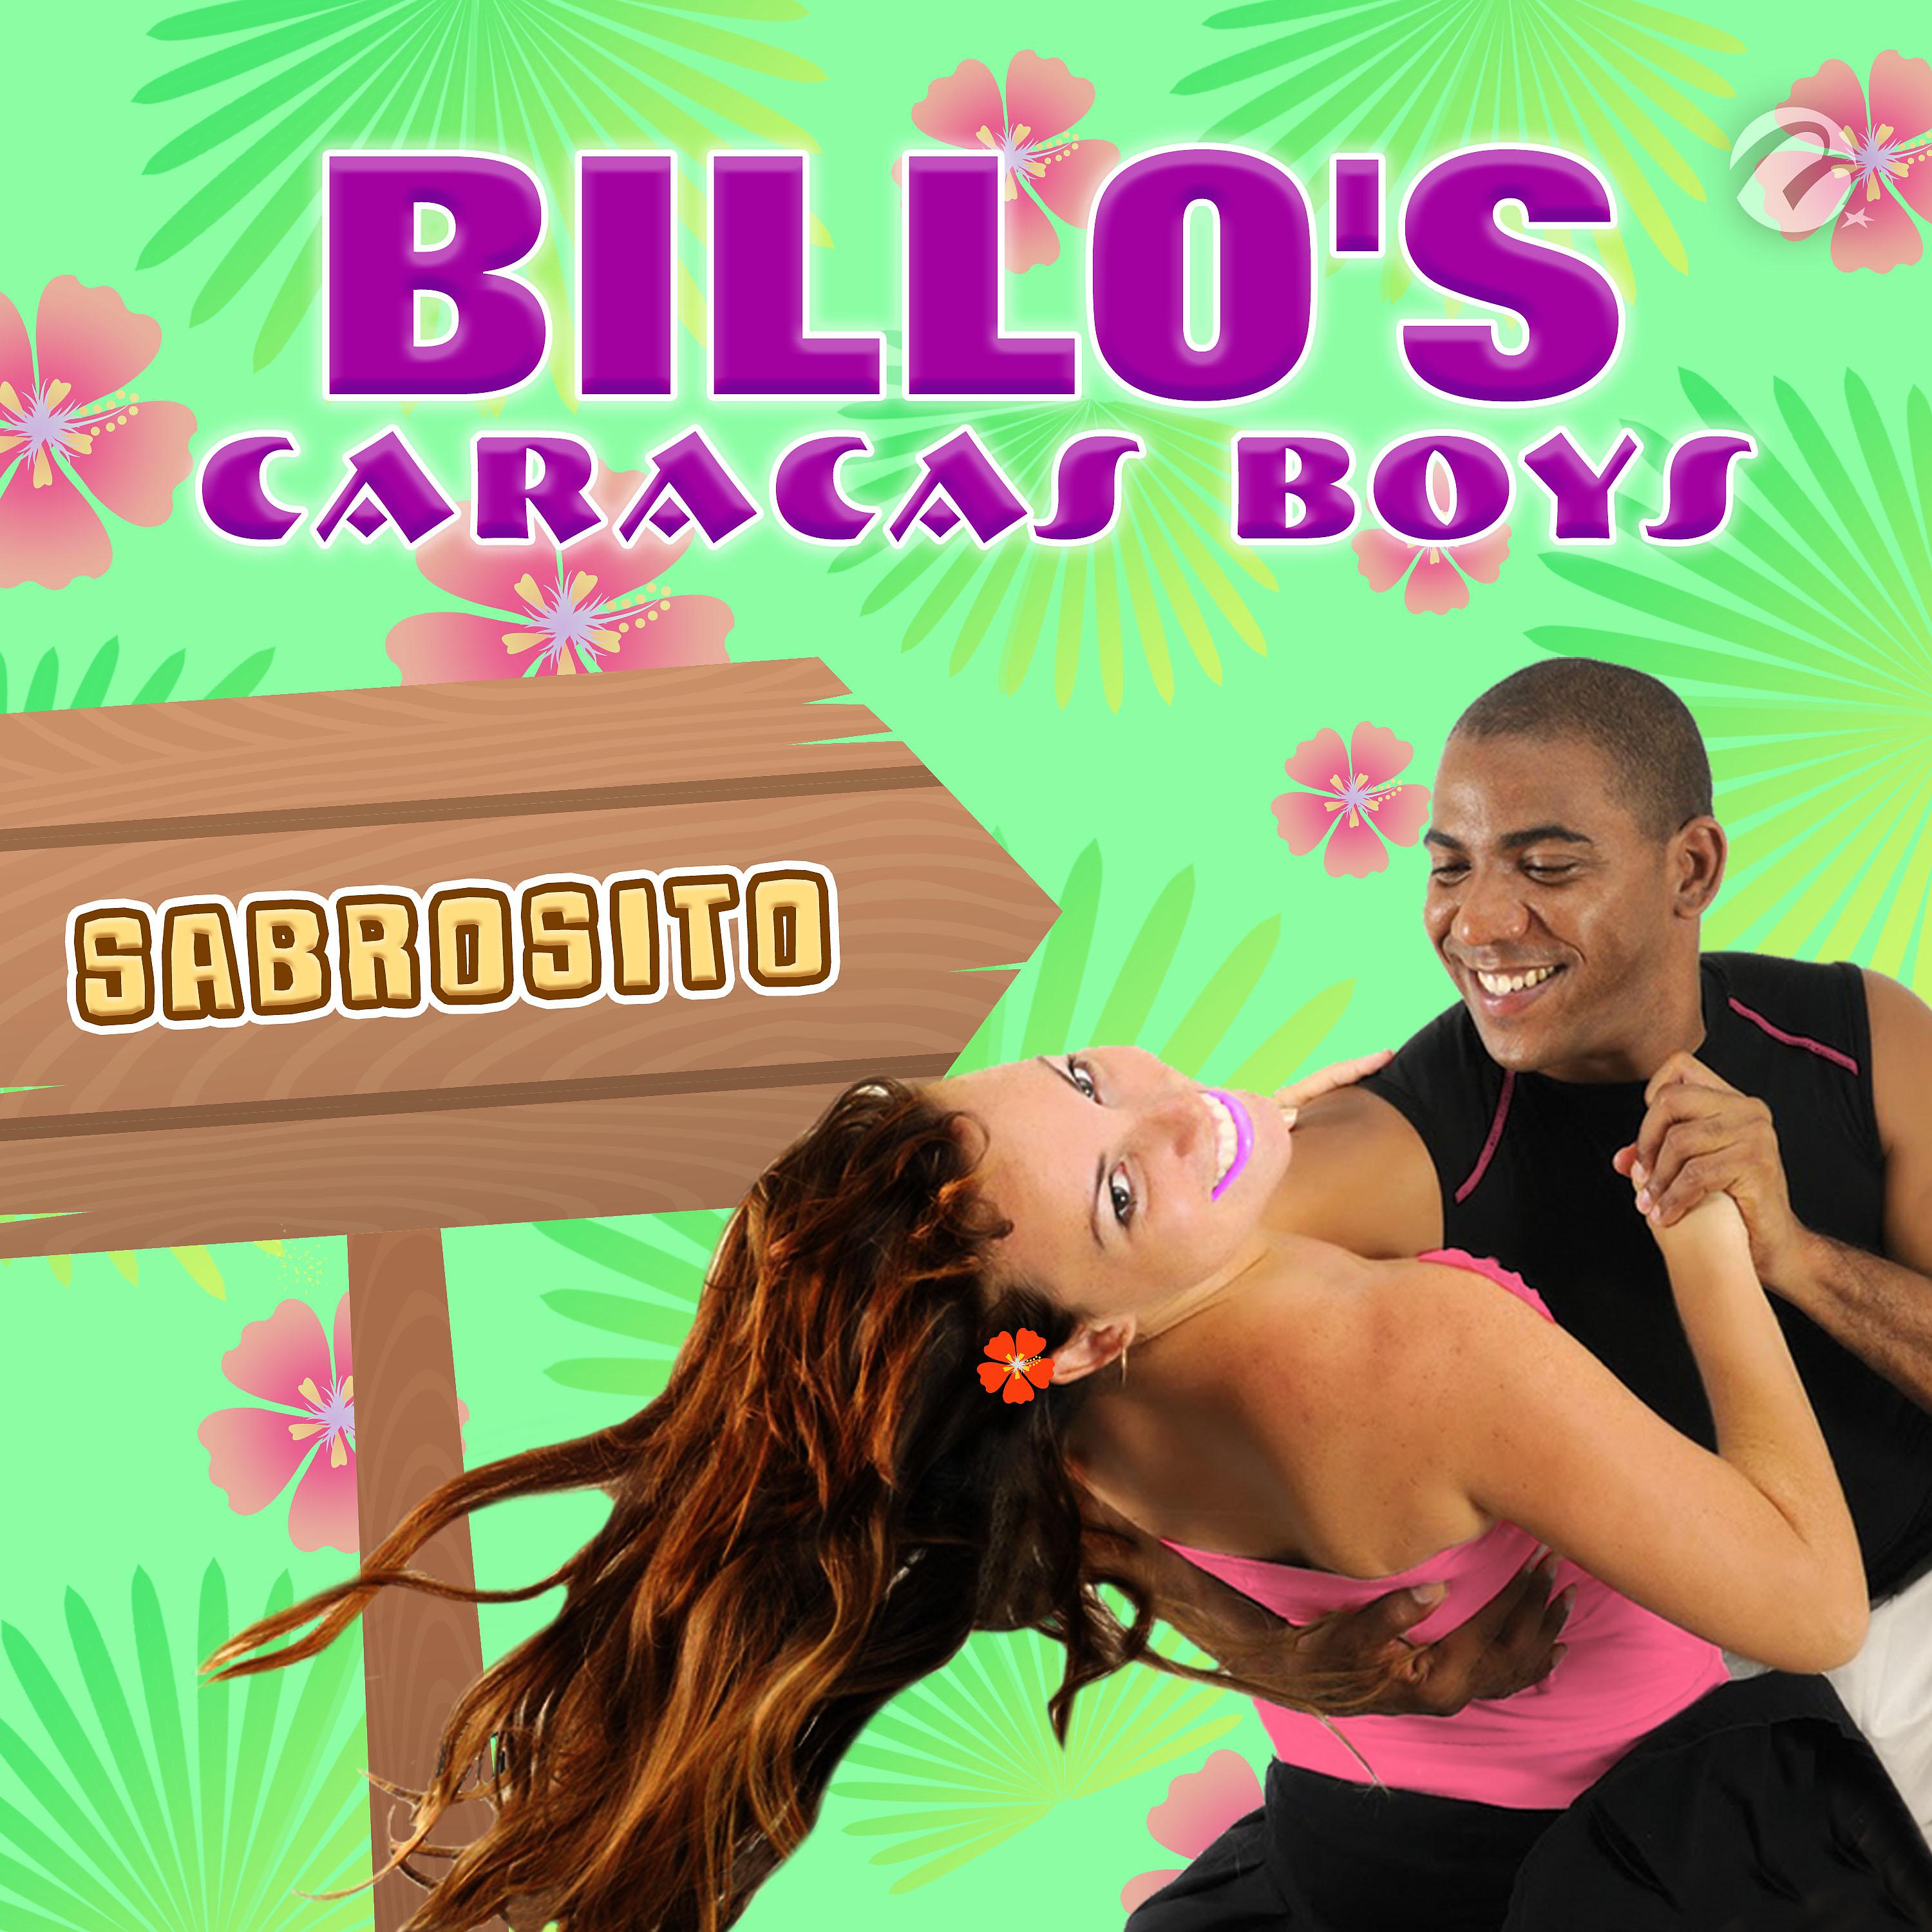 Постер альбома Sabrosito